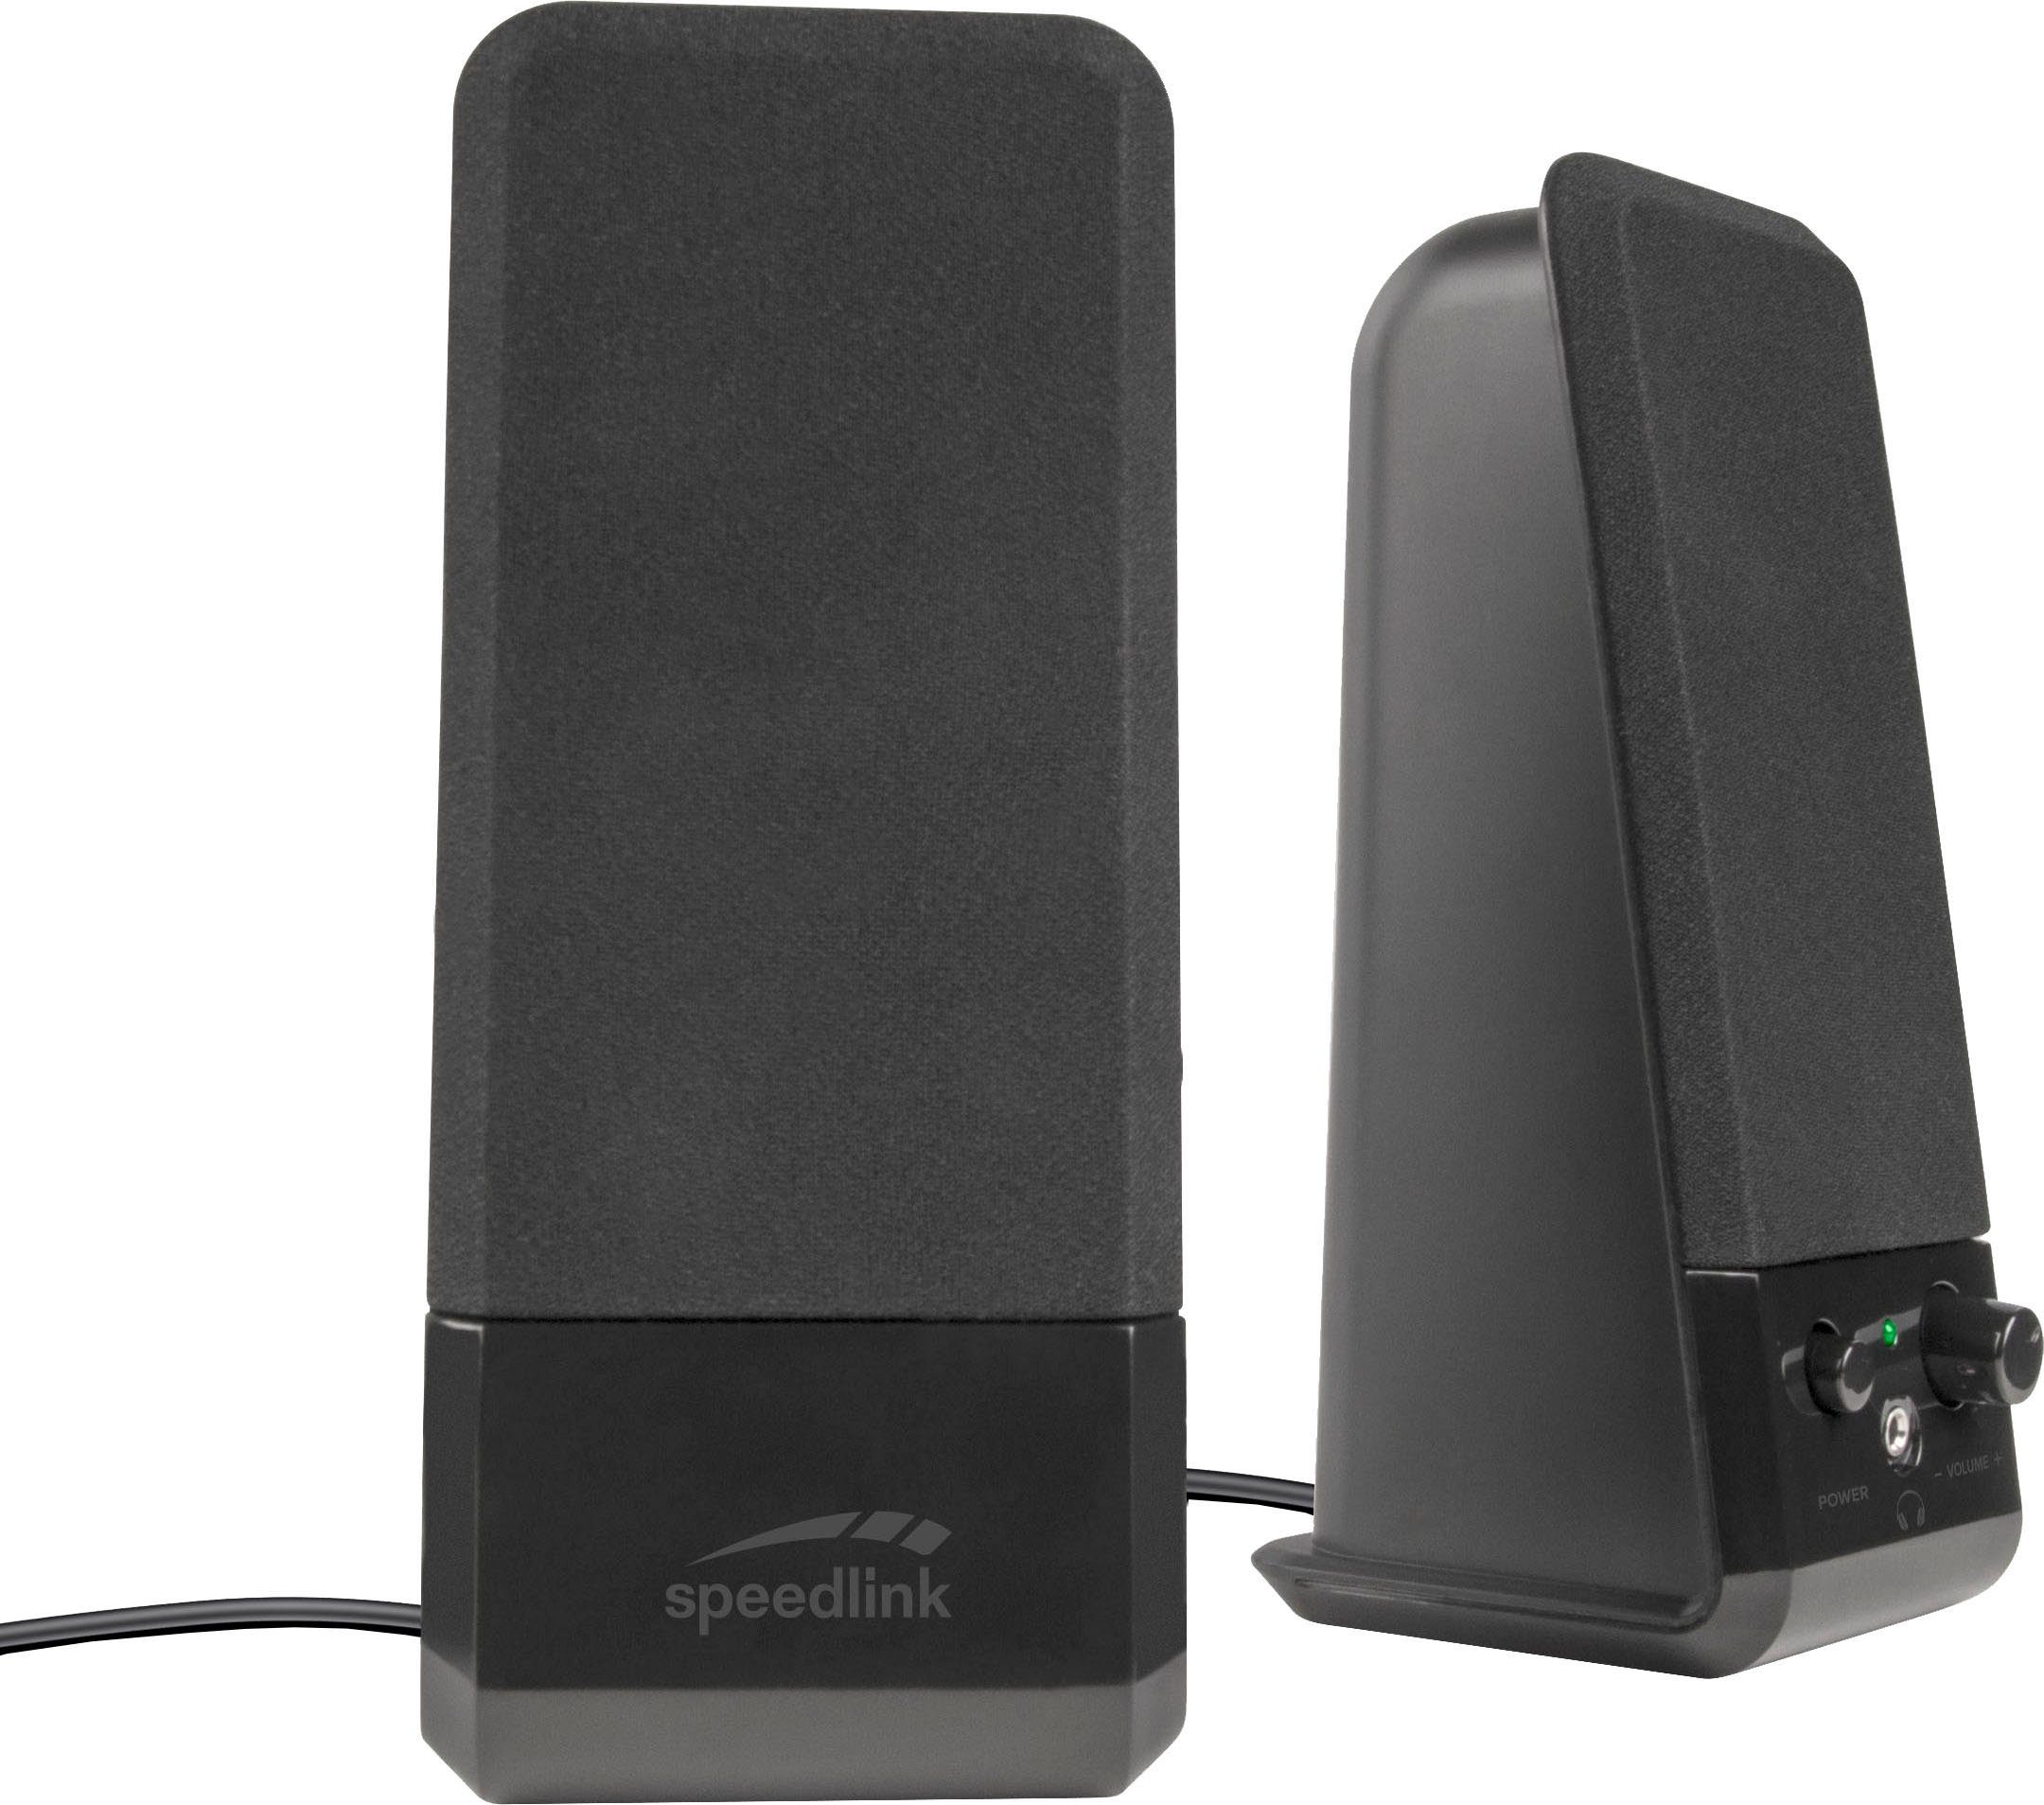 (5 W) EVENT Stereo Speedlink PC-Lautsprecher